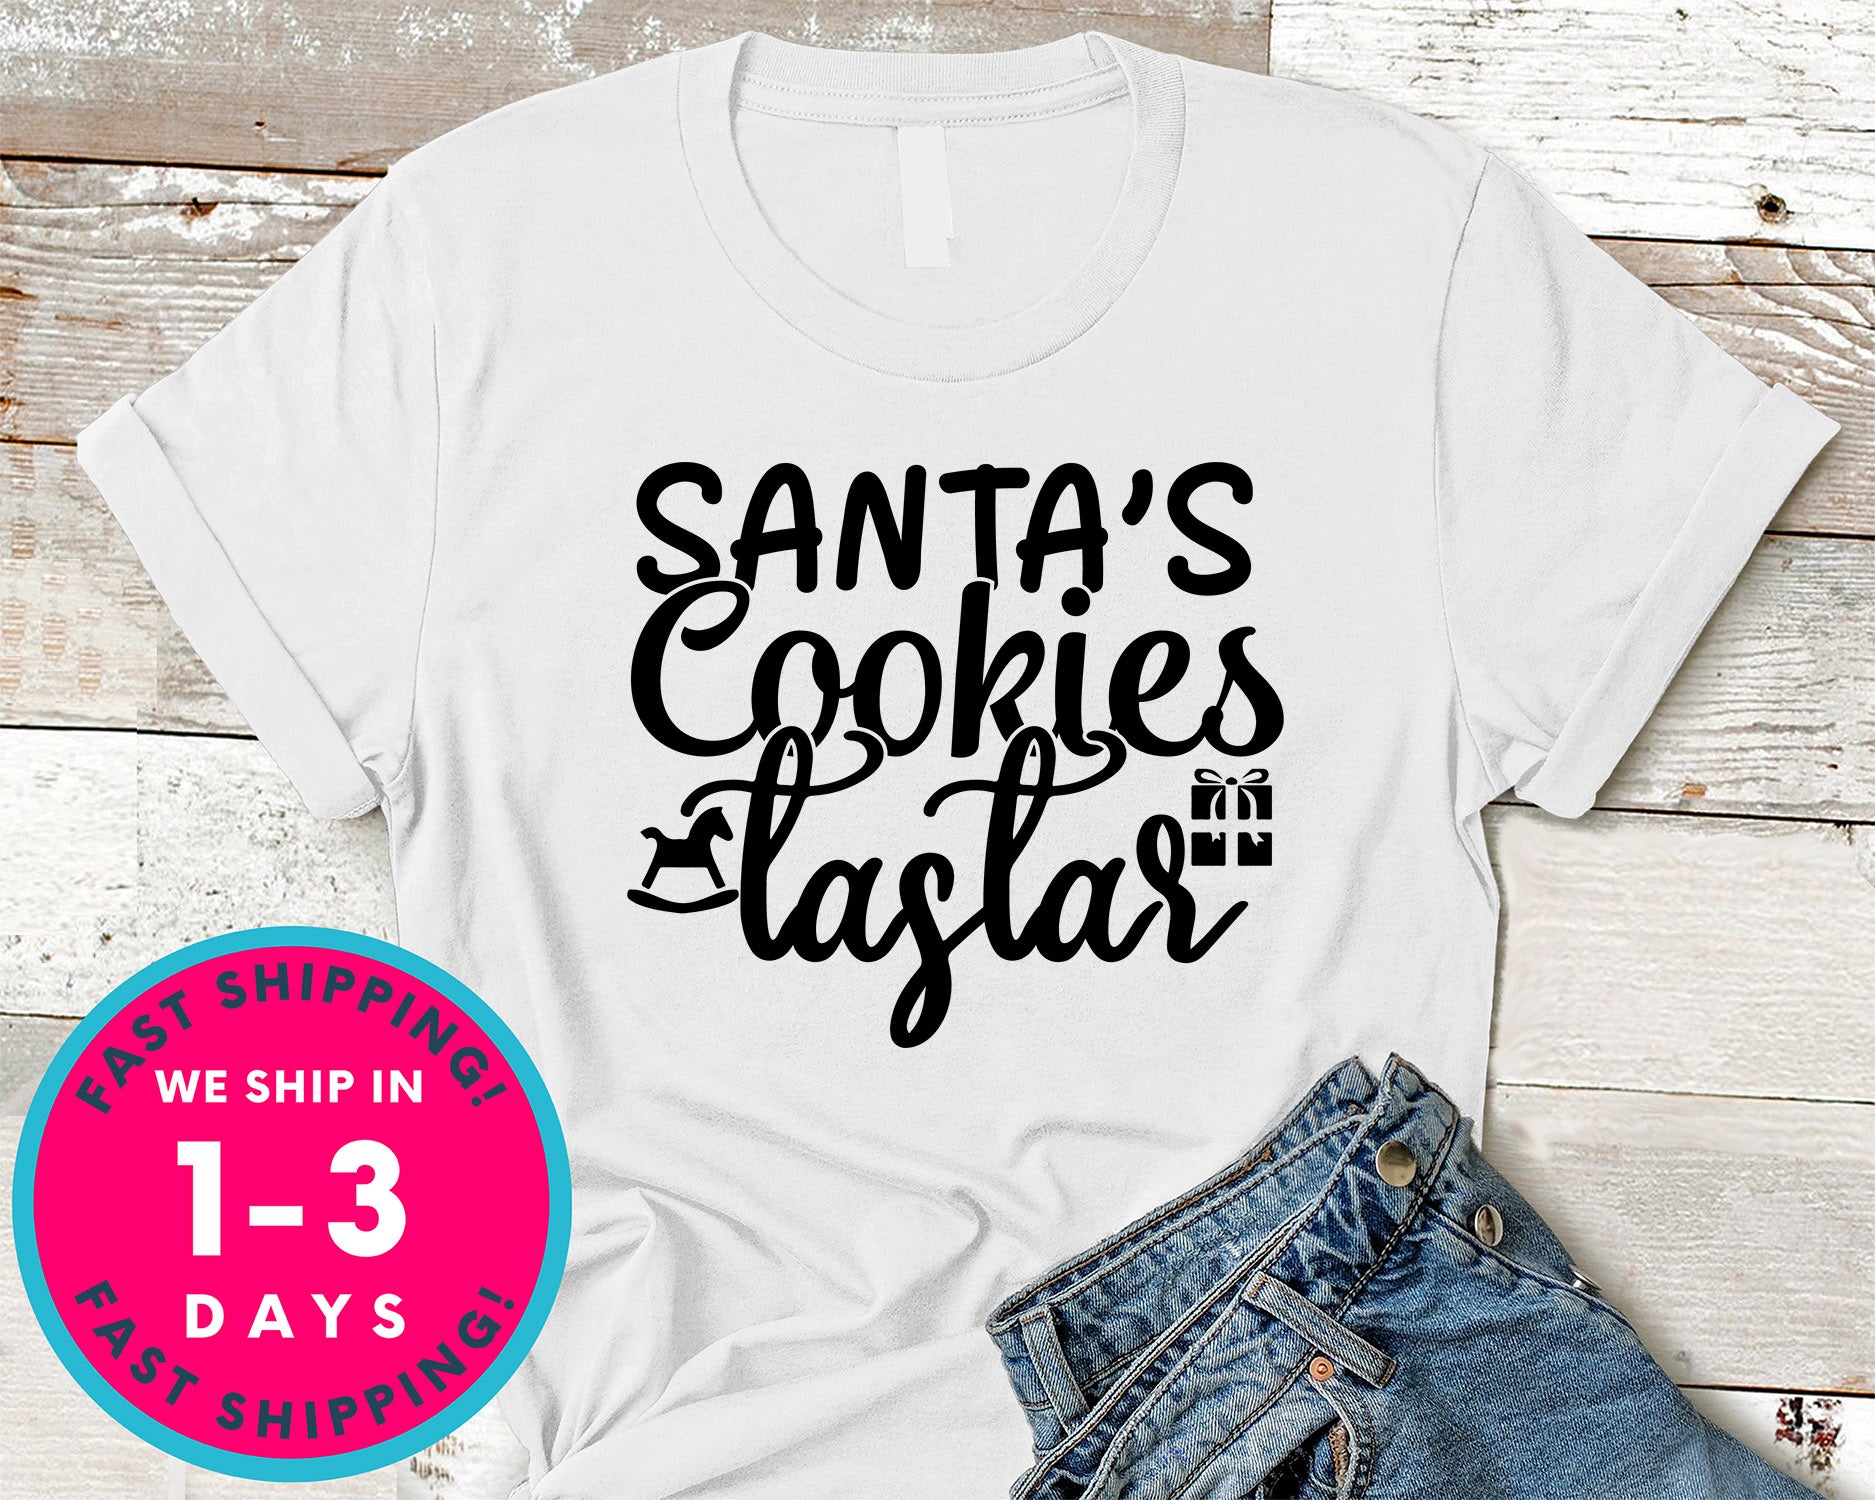 Santa's Tastar Cookies